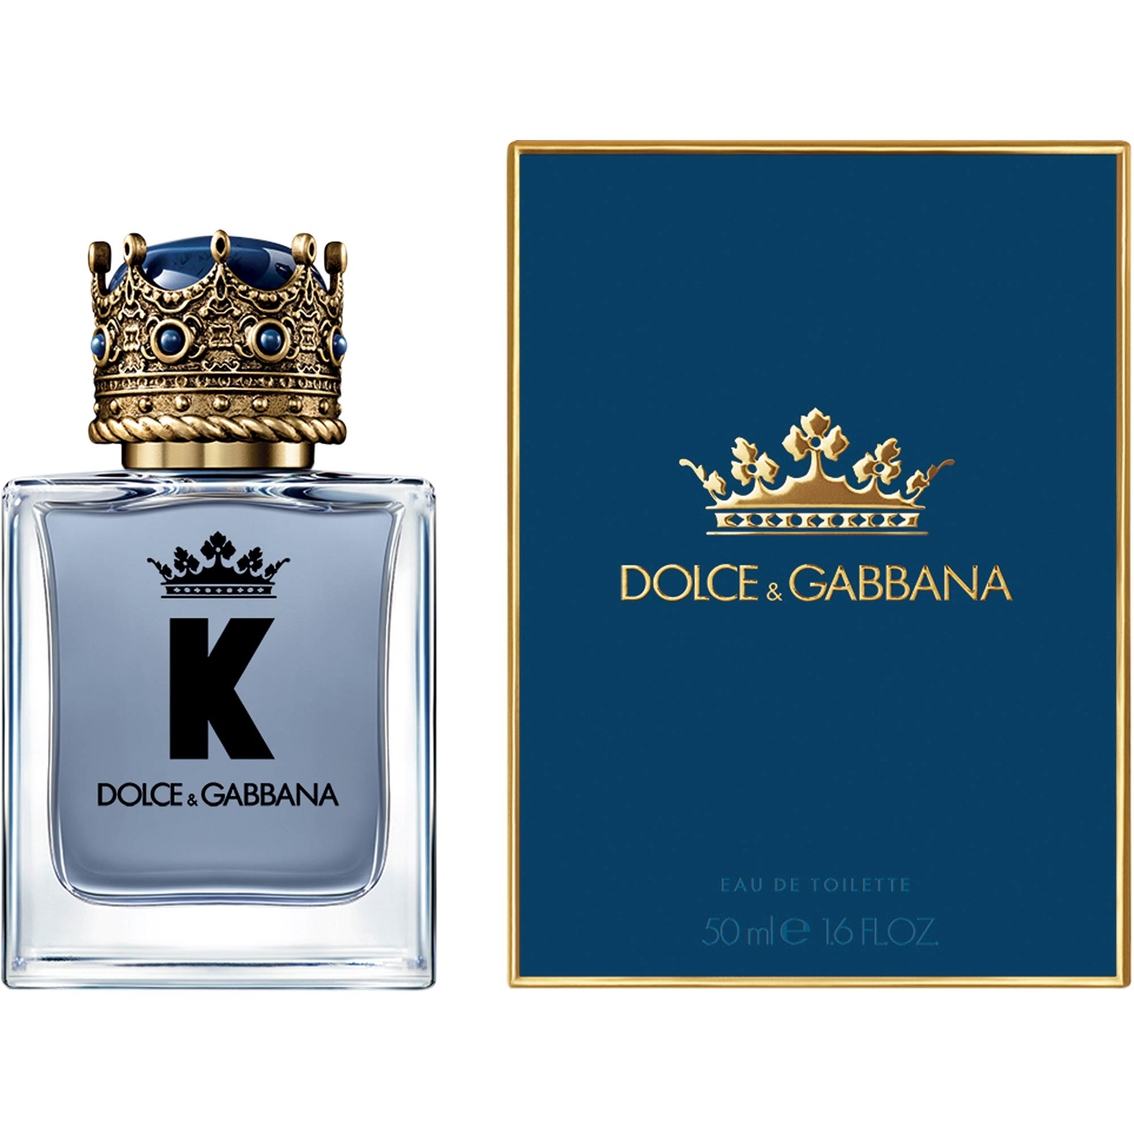 Dolce & Gabbana K Eau de Toilette Spray - Image 2 of 2